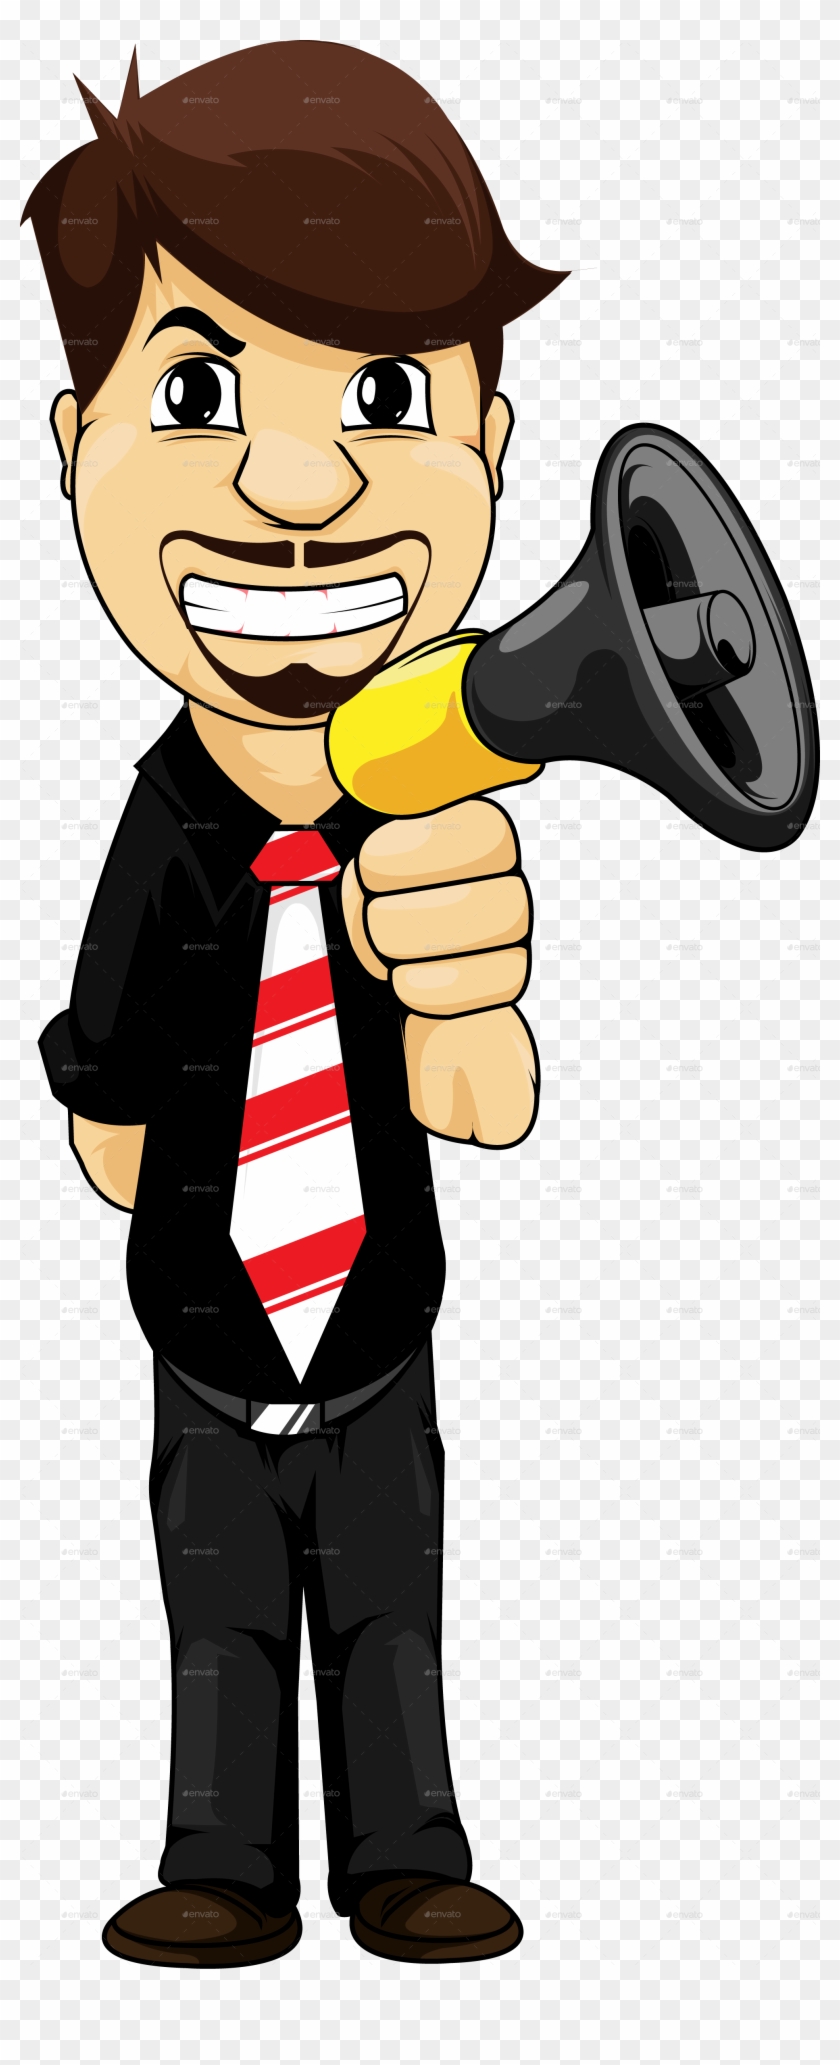 Business Man Character - Cartoon #557573